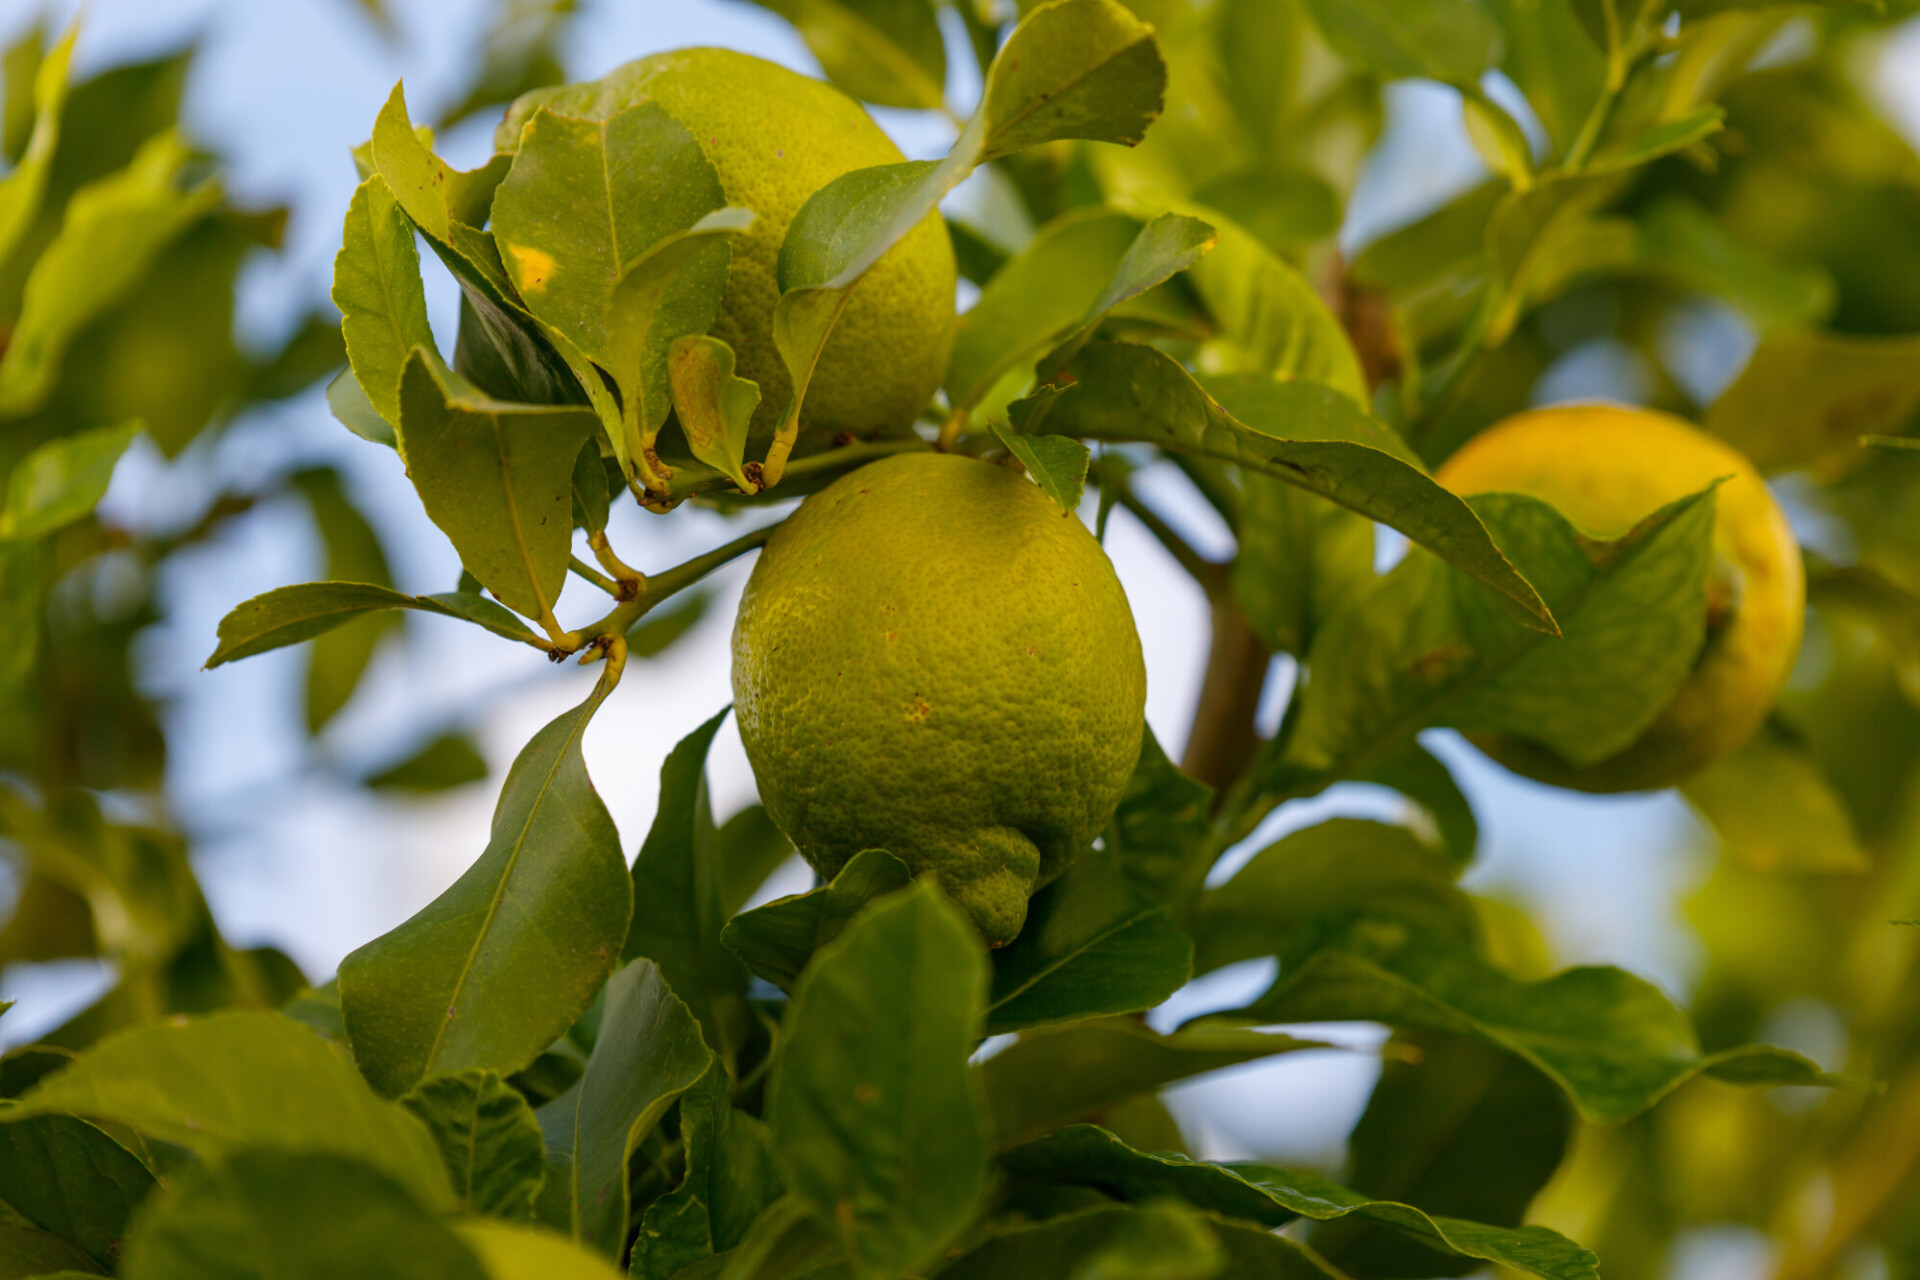 green lemons ripen on the tree in the portuguese sun